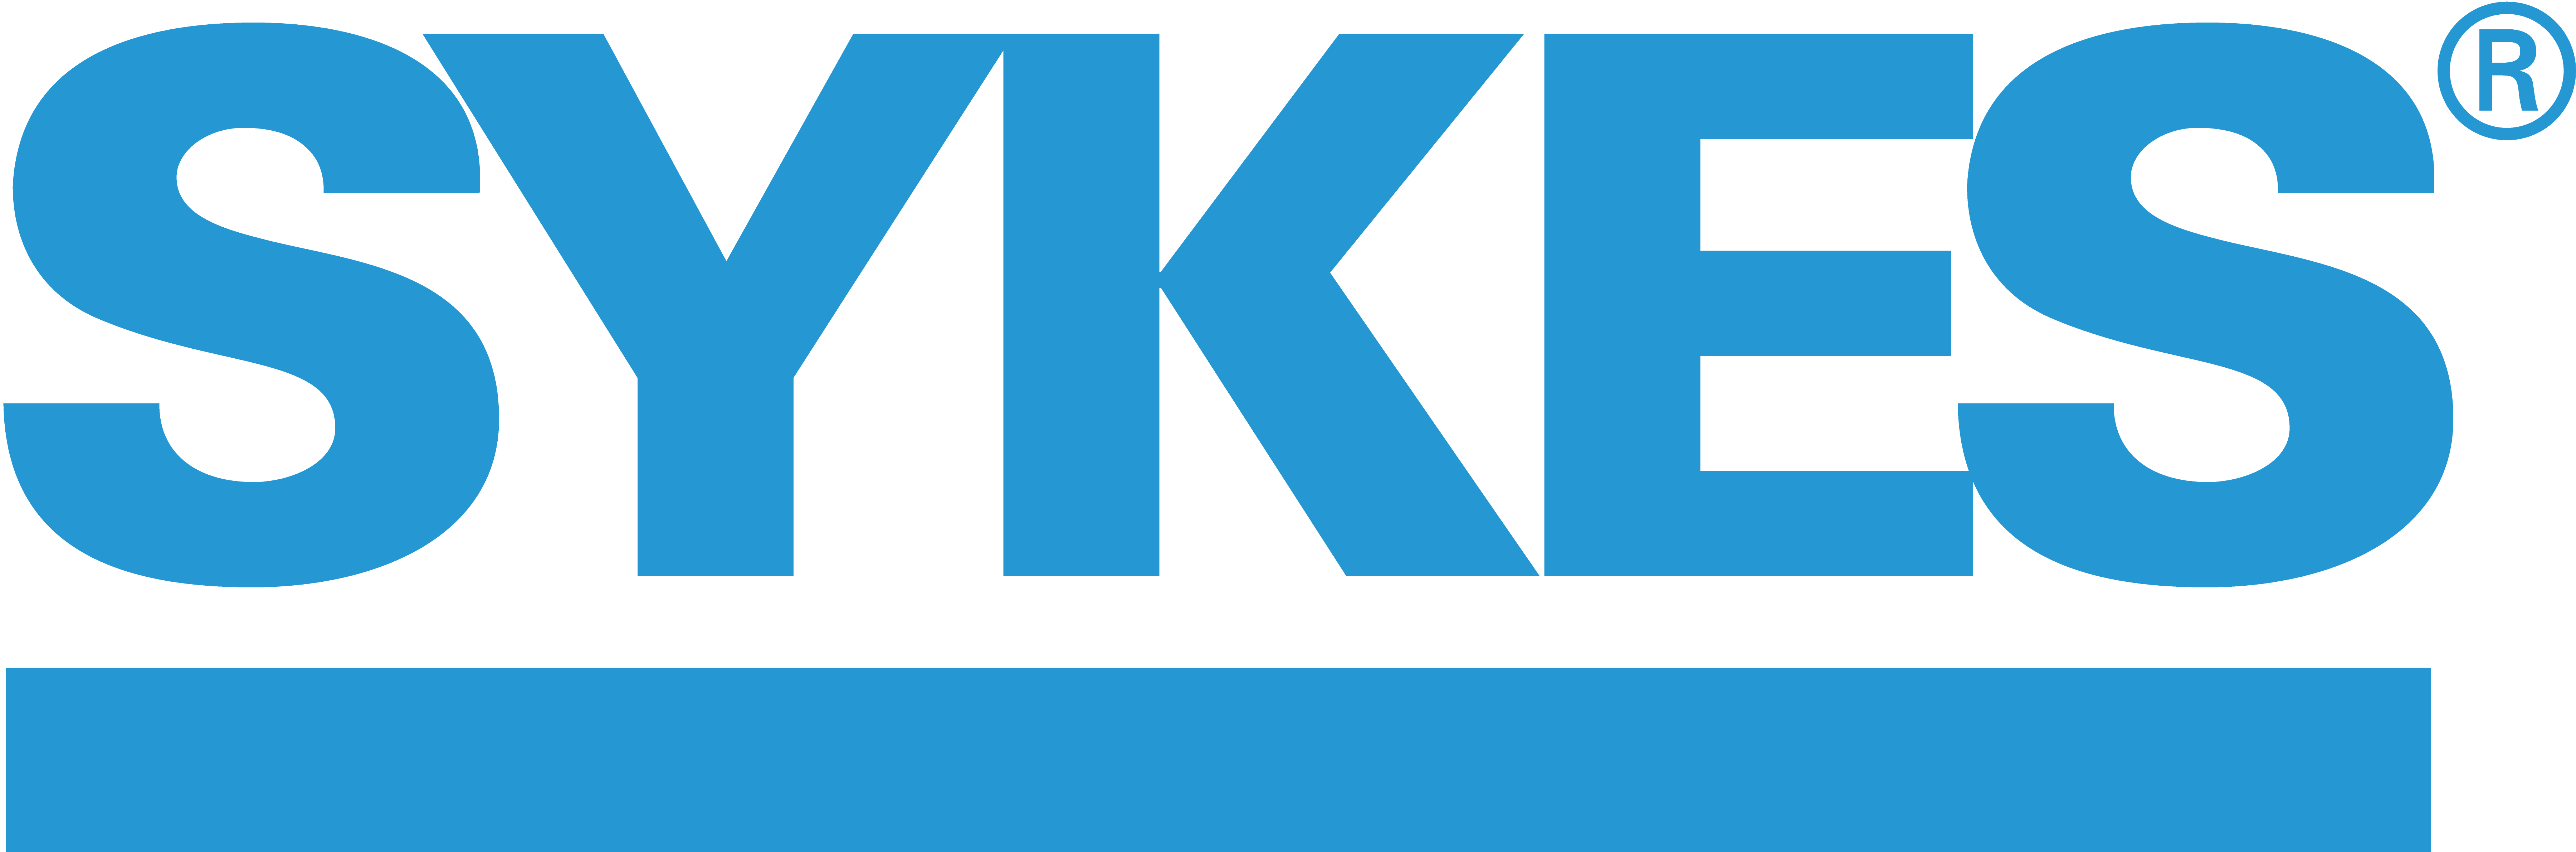 SYKES-Logo-Standard-CMYK-Blue